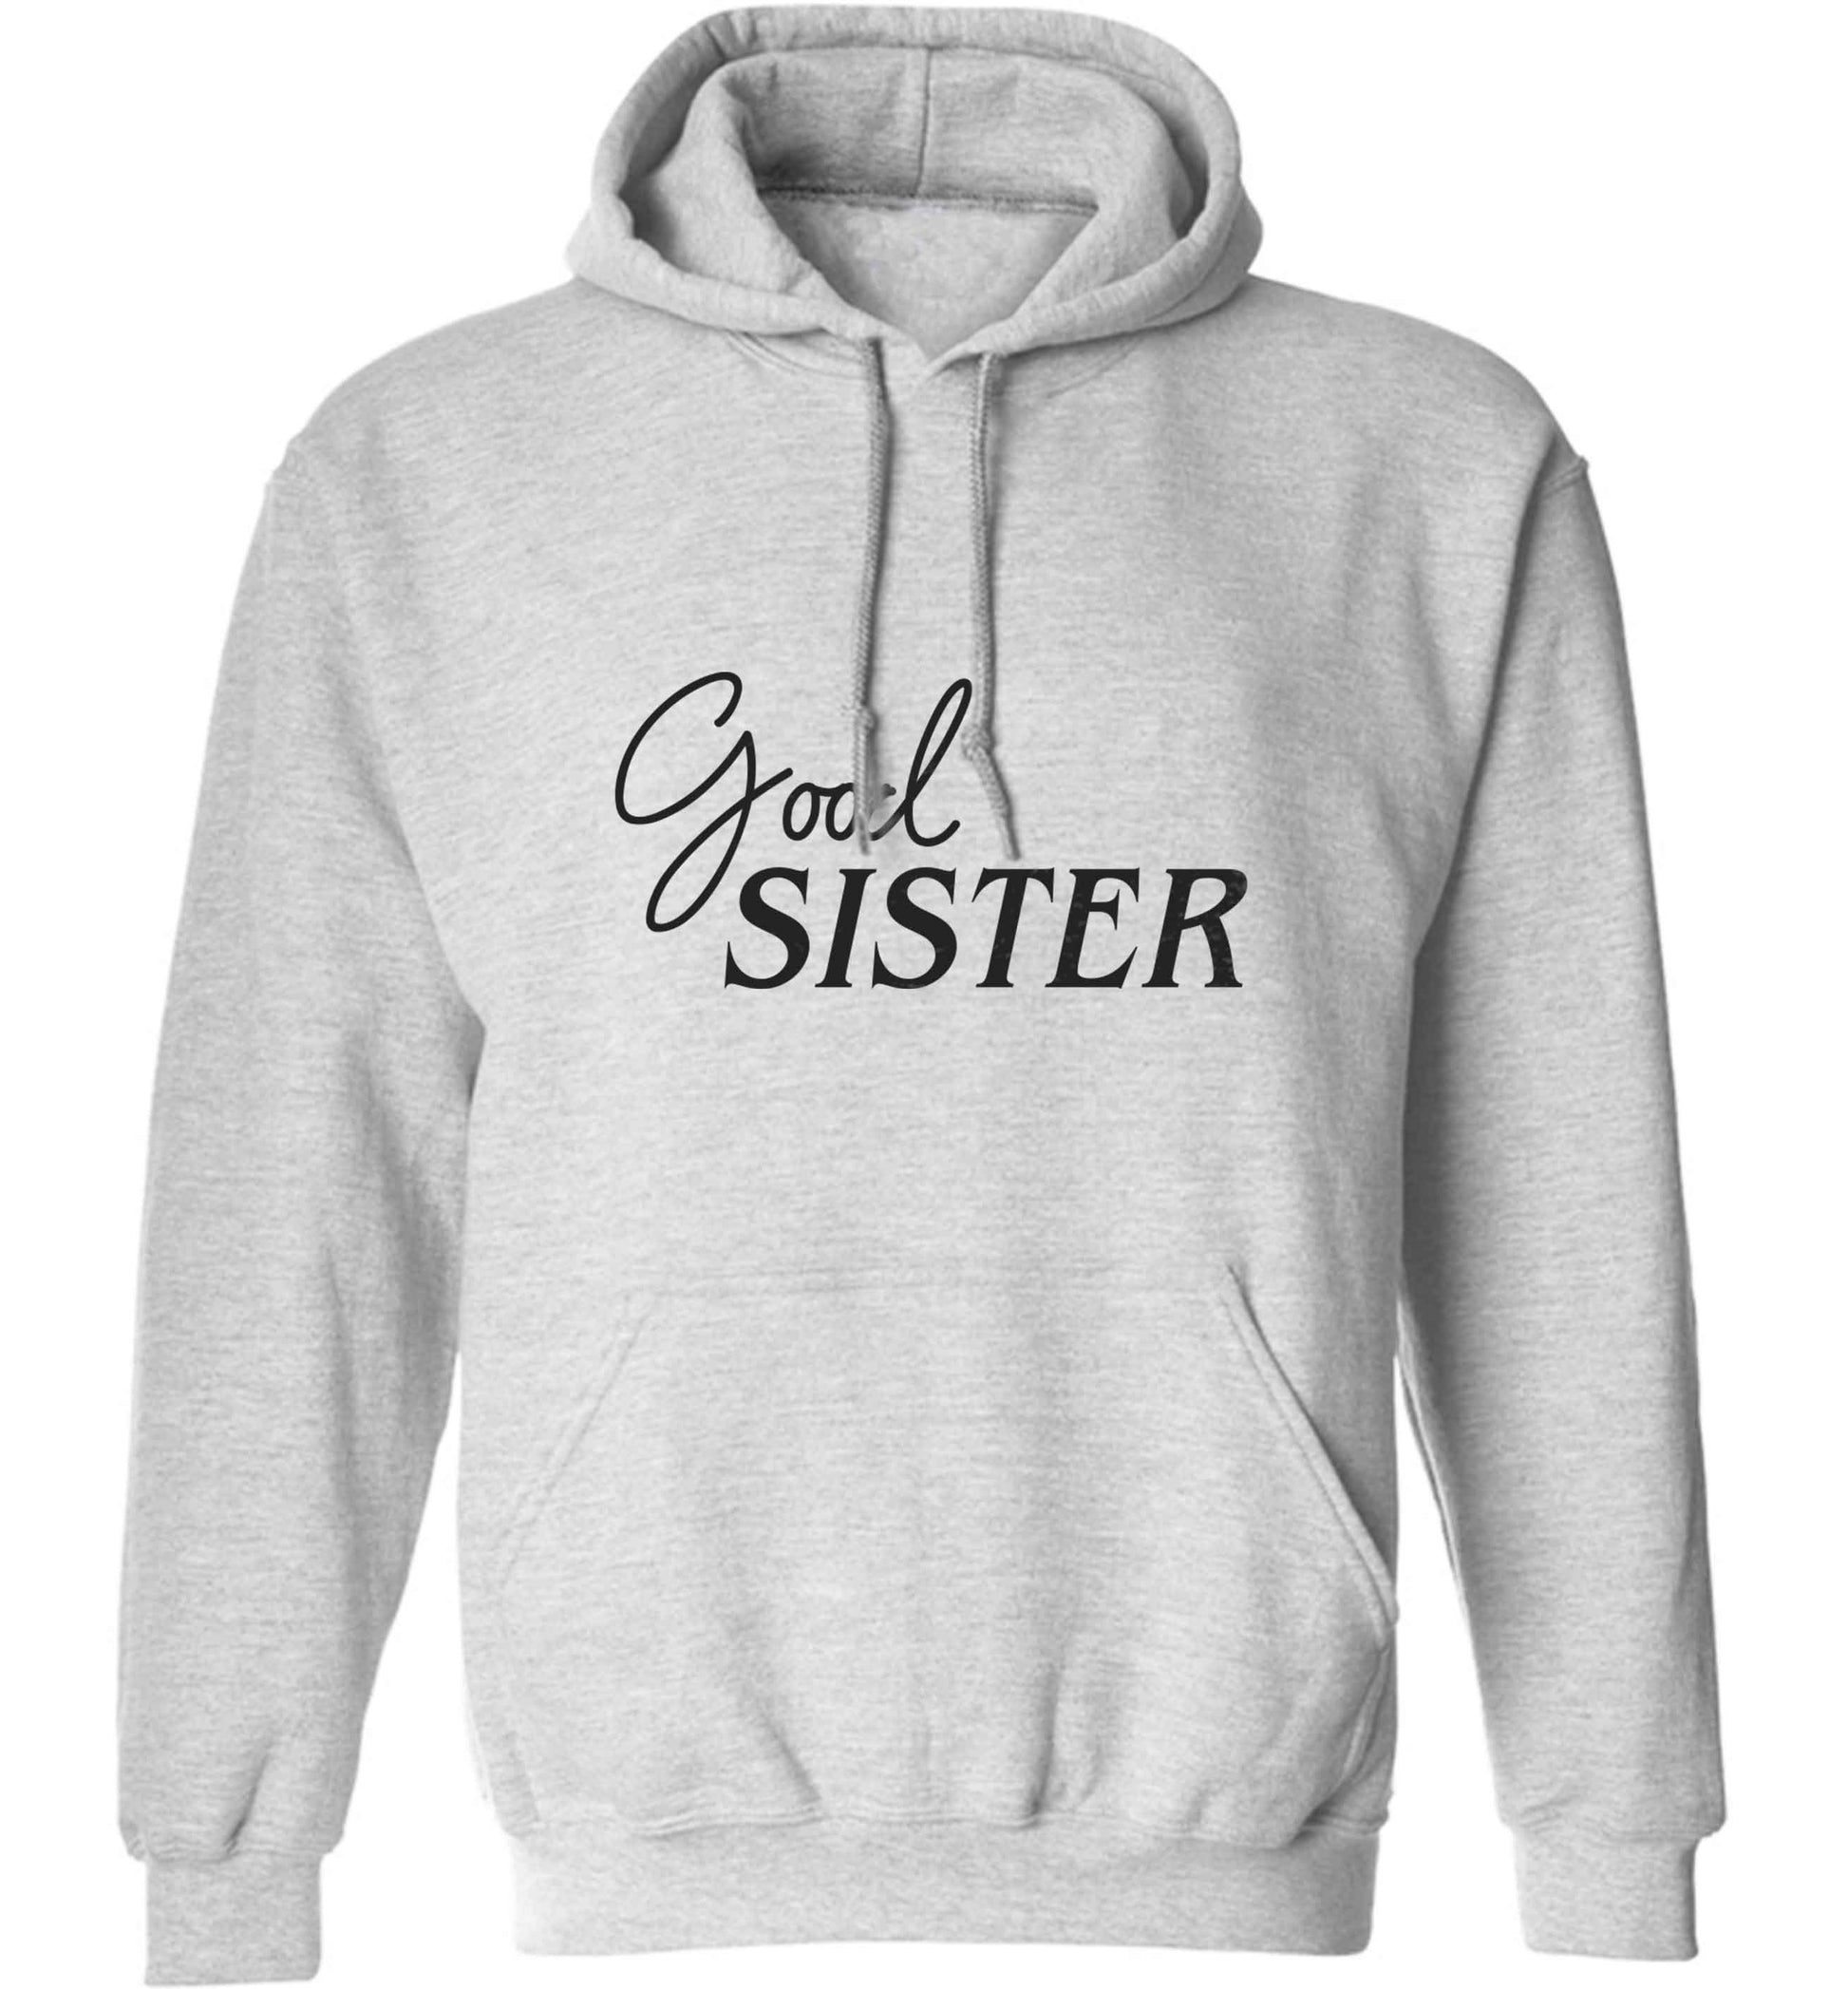 Good sister adults unisex grey hoodie 2XL